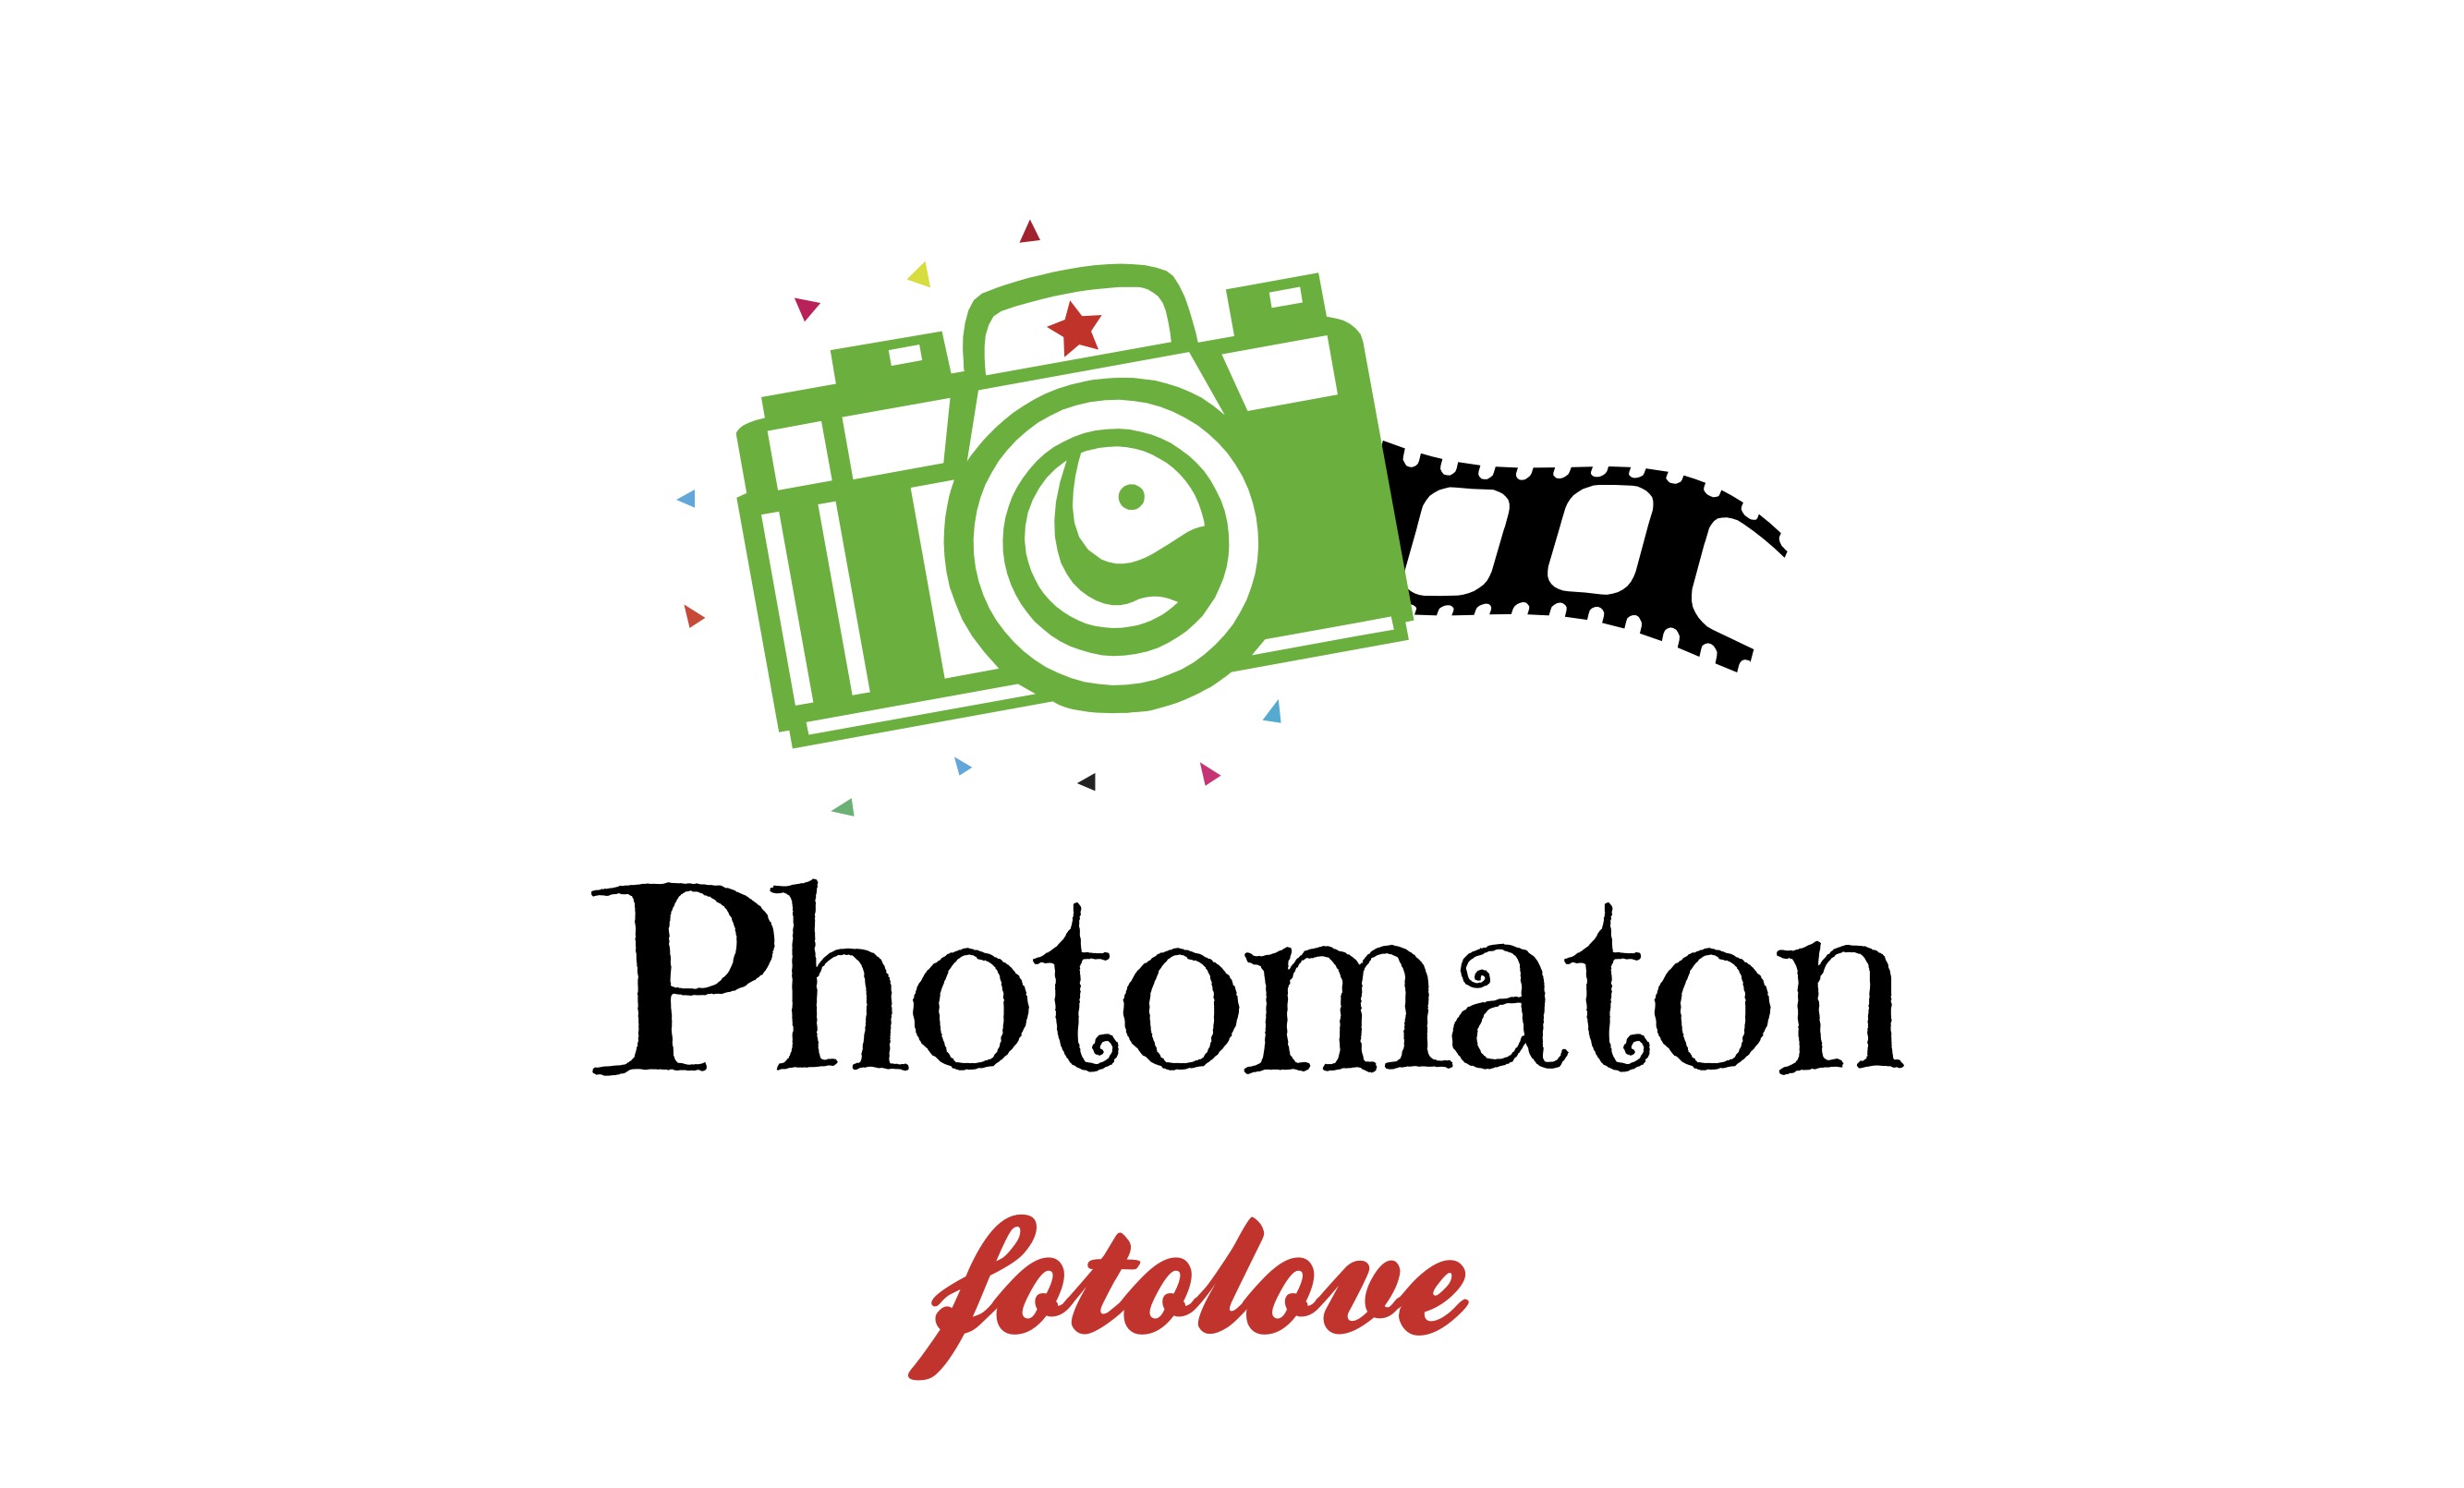 logo-photomaton-fotolove